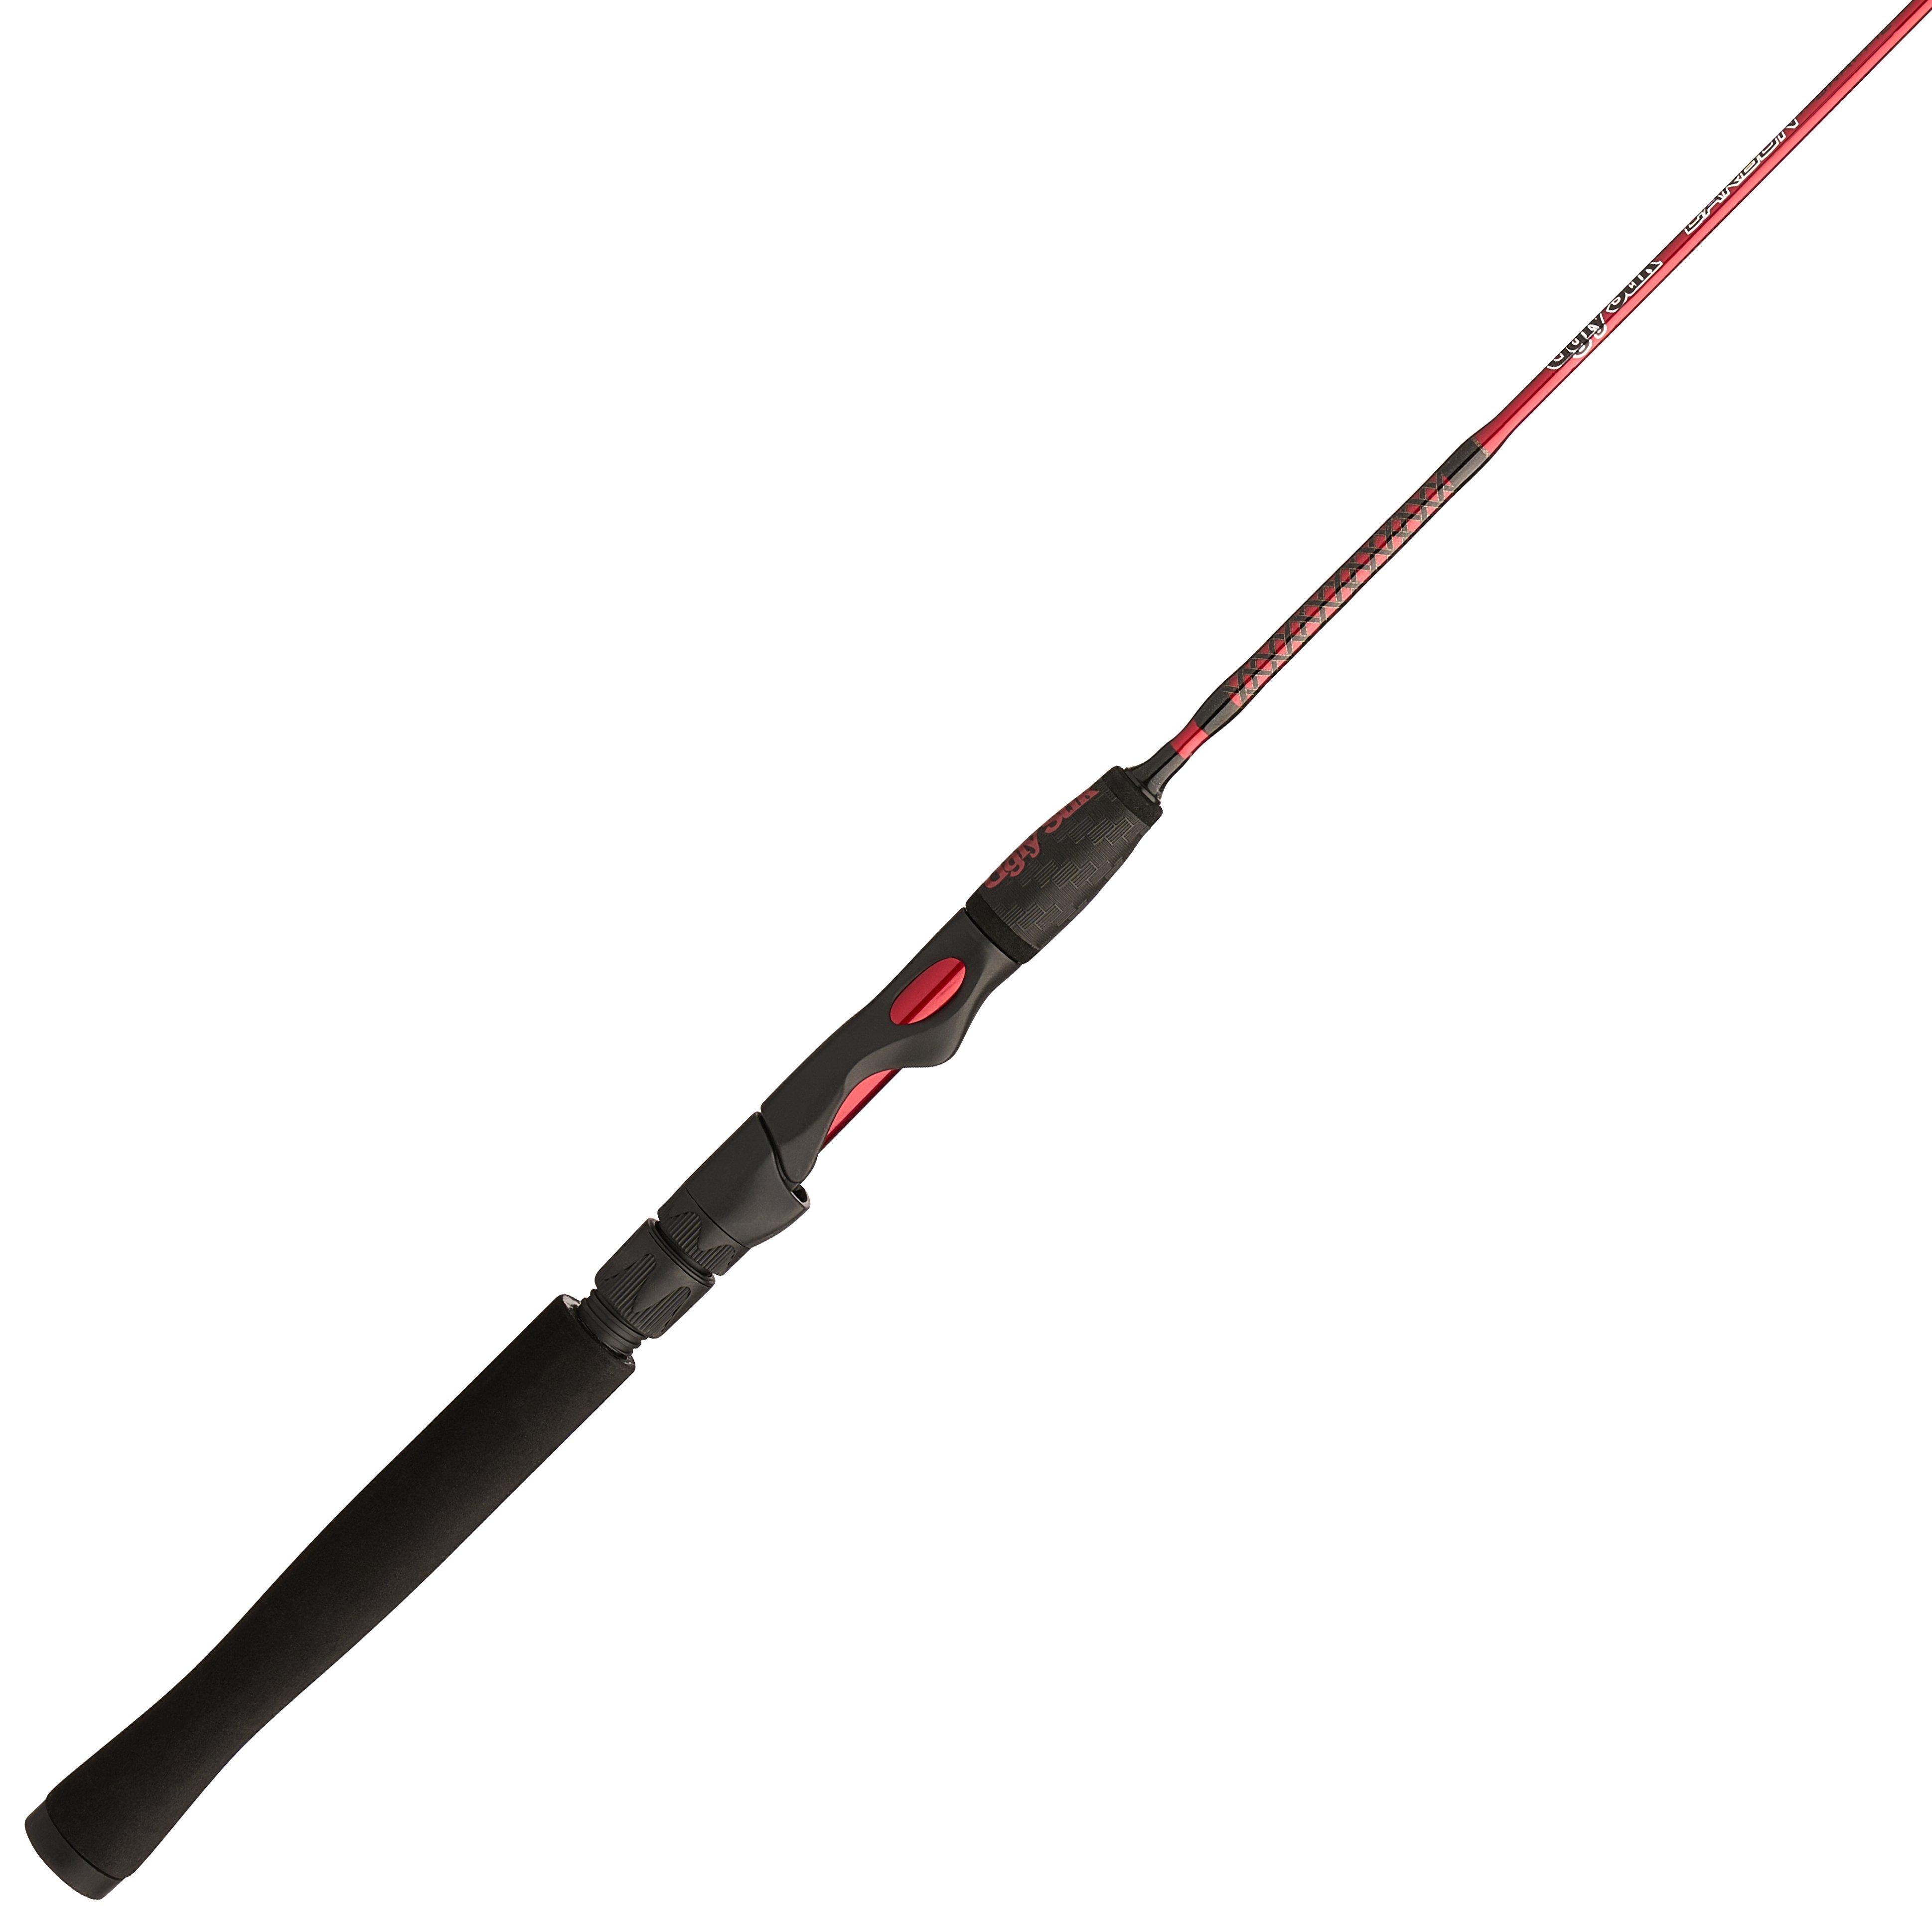 Ugly Stik Carbon Spinning Fishing Rod 6'6 - Medium - 2pc